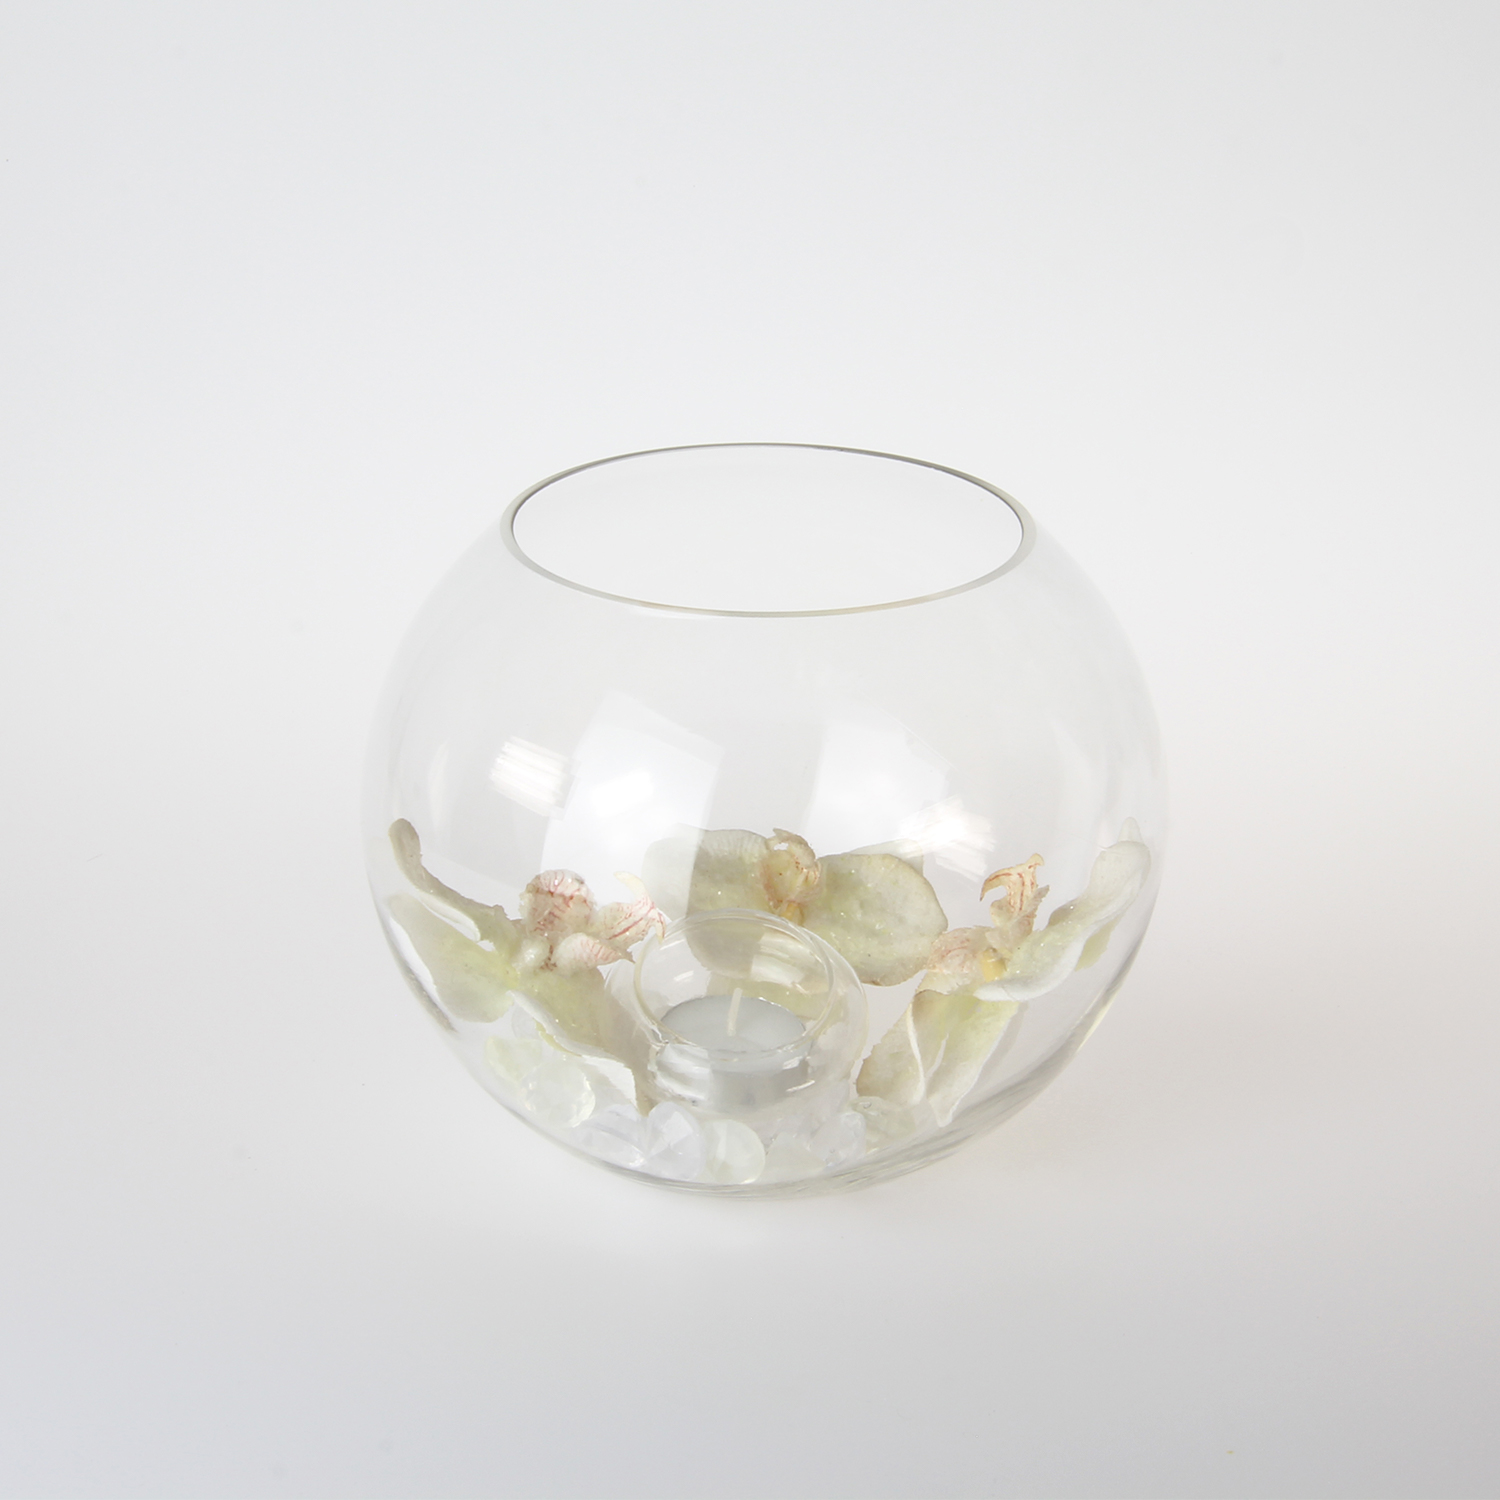 Glass sphere (fishbowl) vase GSV43